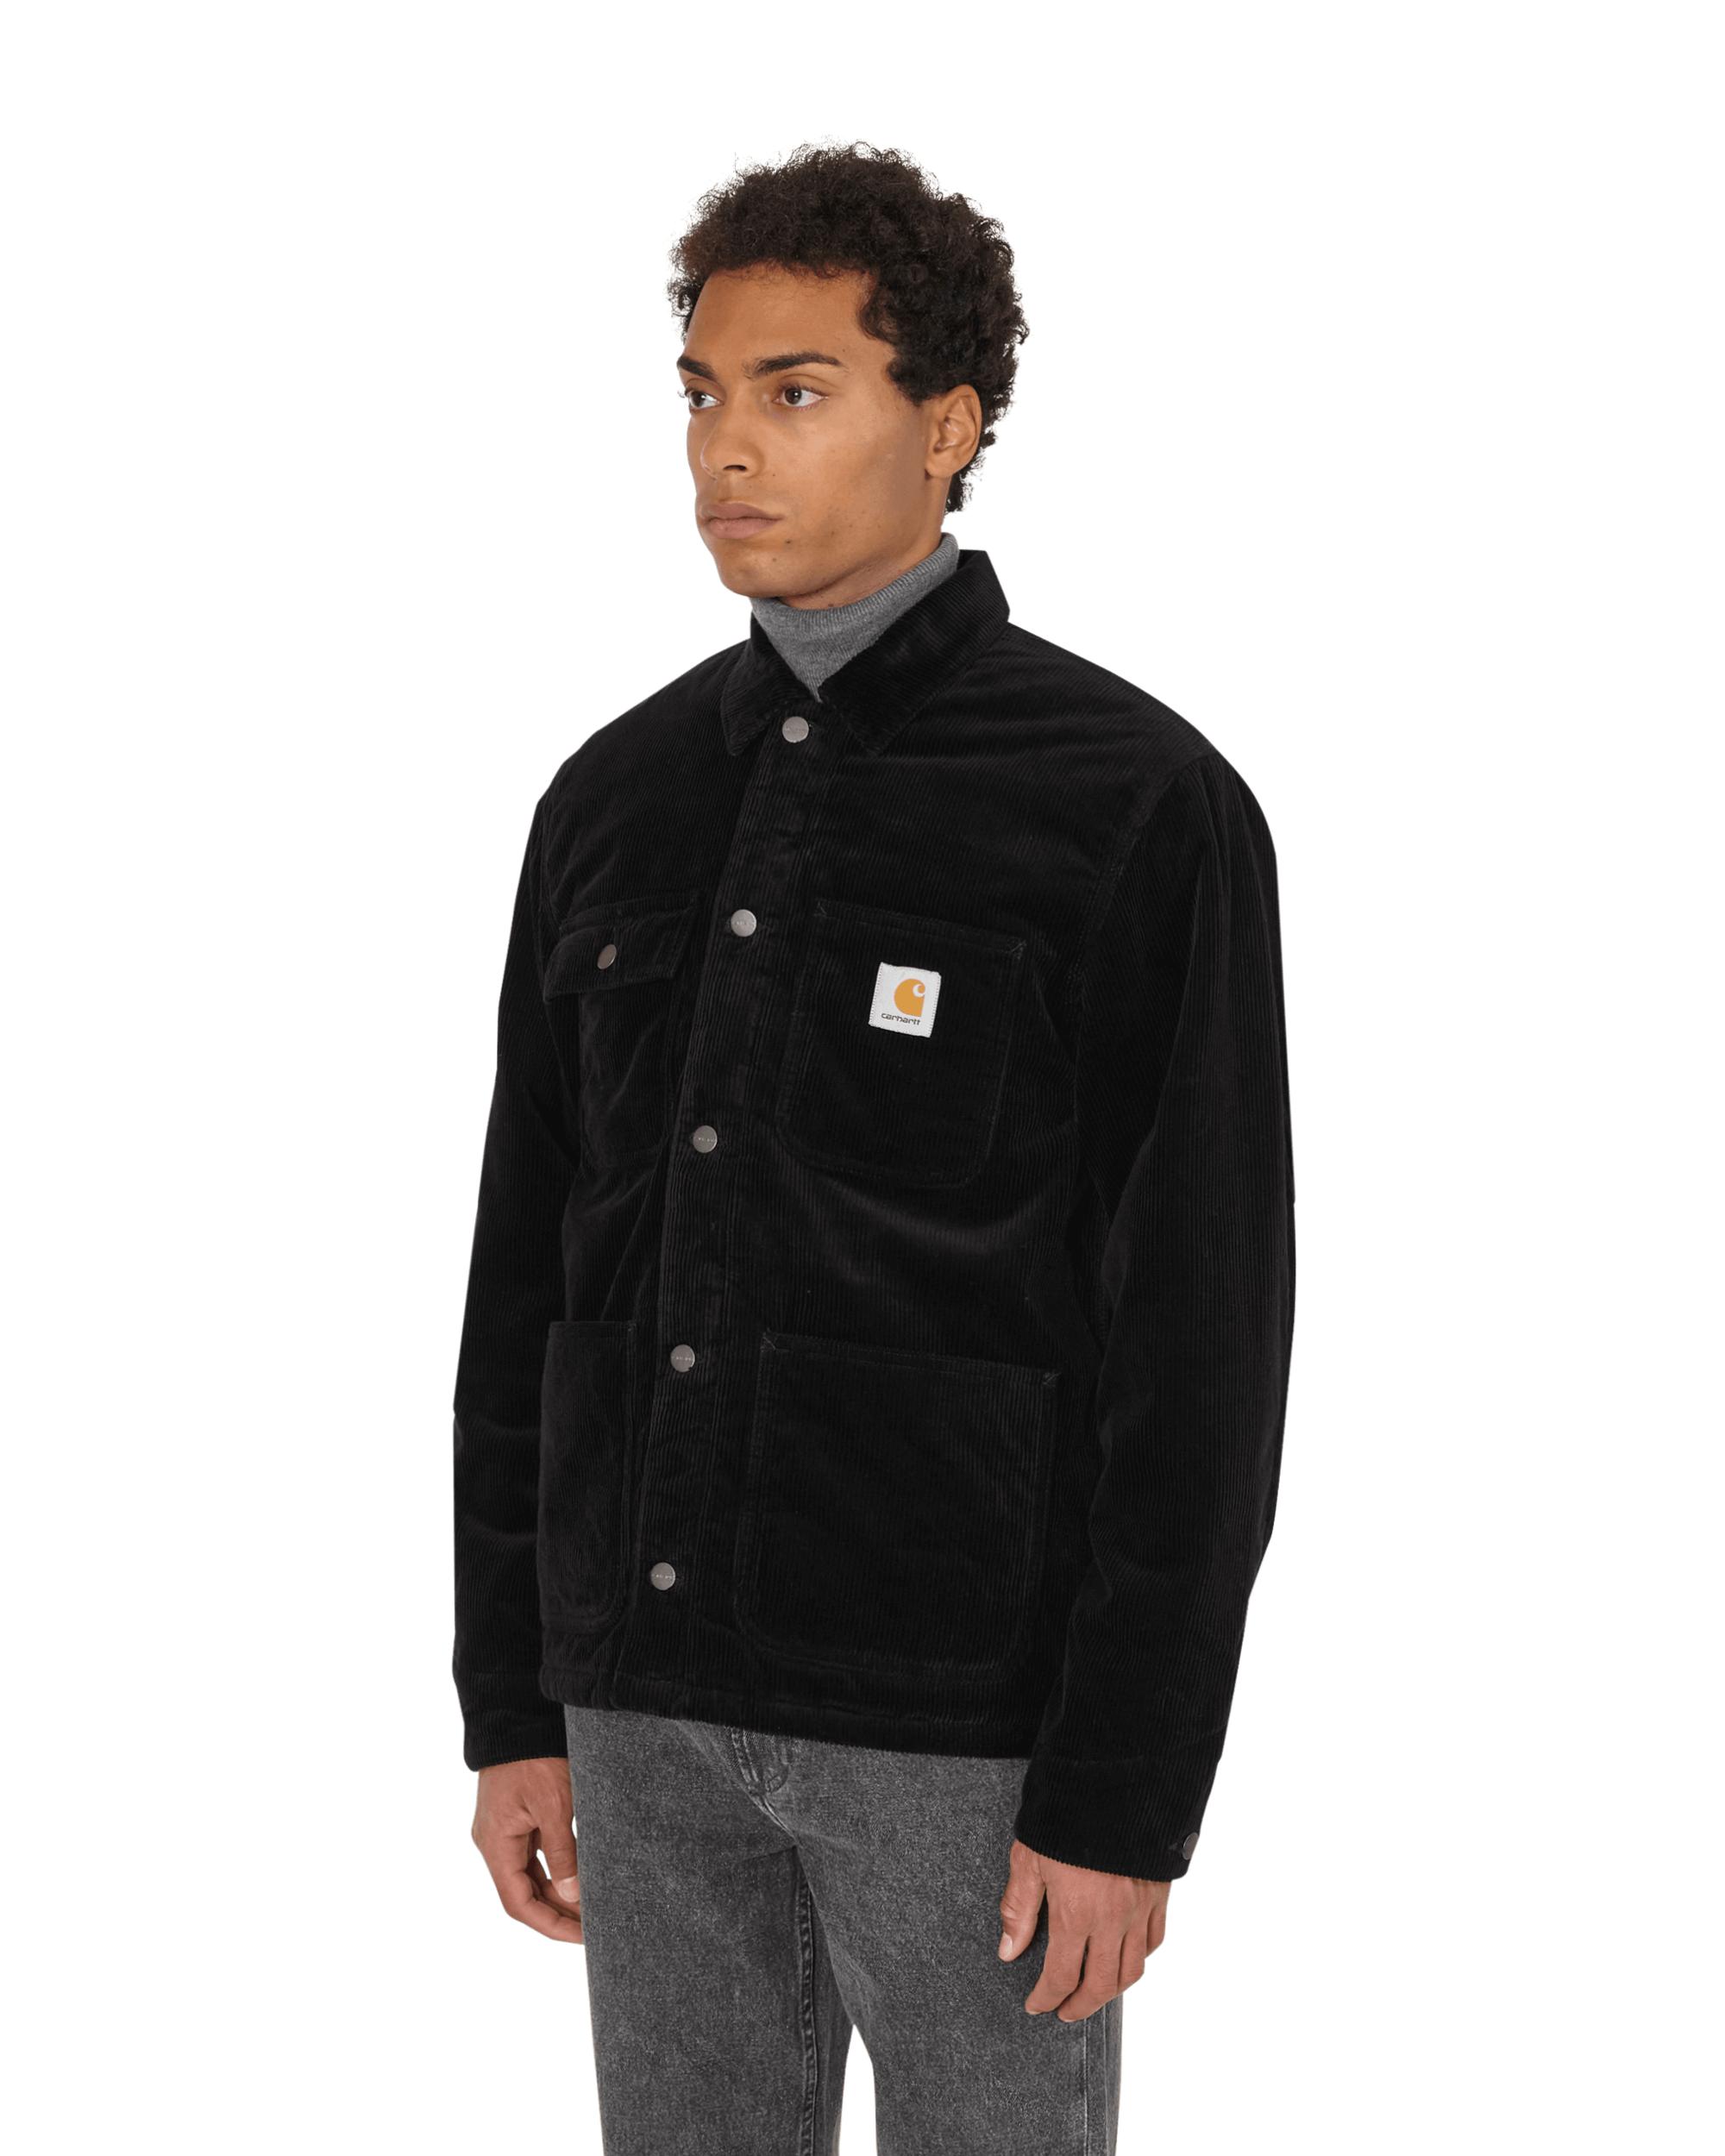 Carhartt WIP Cotton Michigan Coat in Black for Men - Lyst